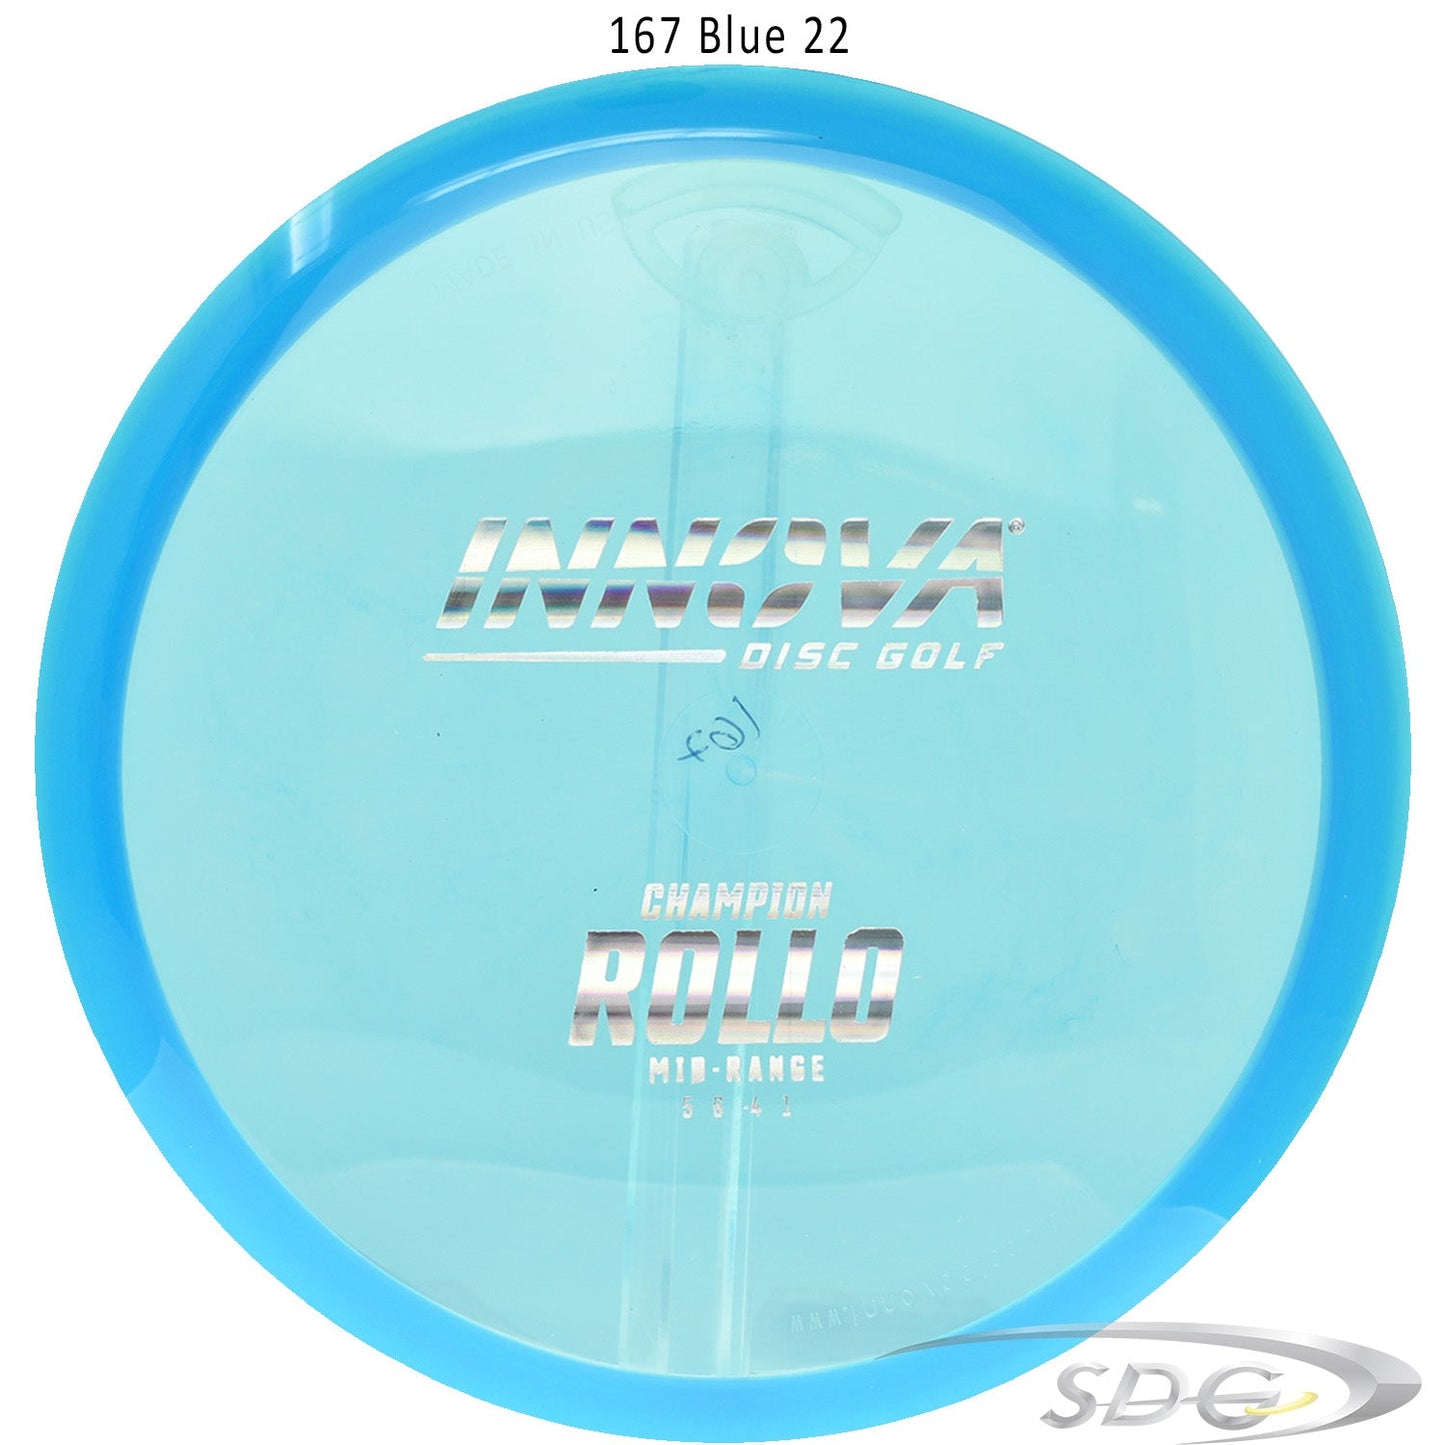 innova-champion-rollo-disc-golf-mid-range 167 Blue 22 